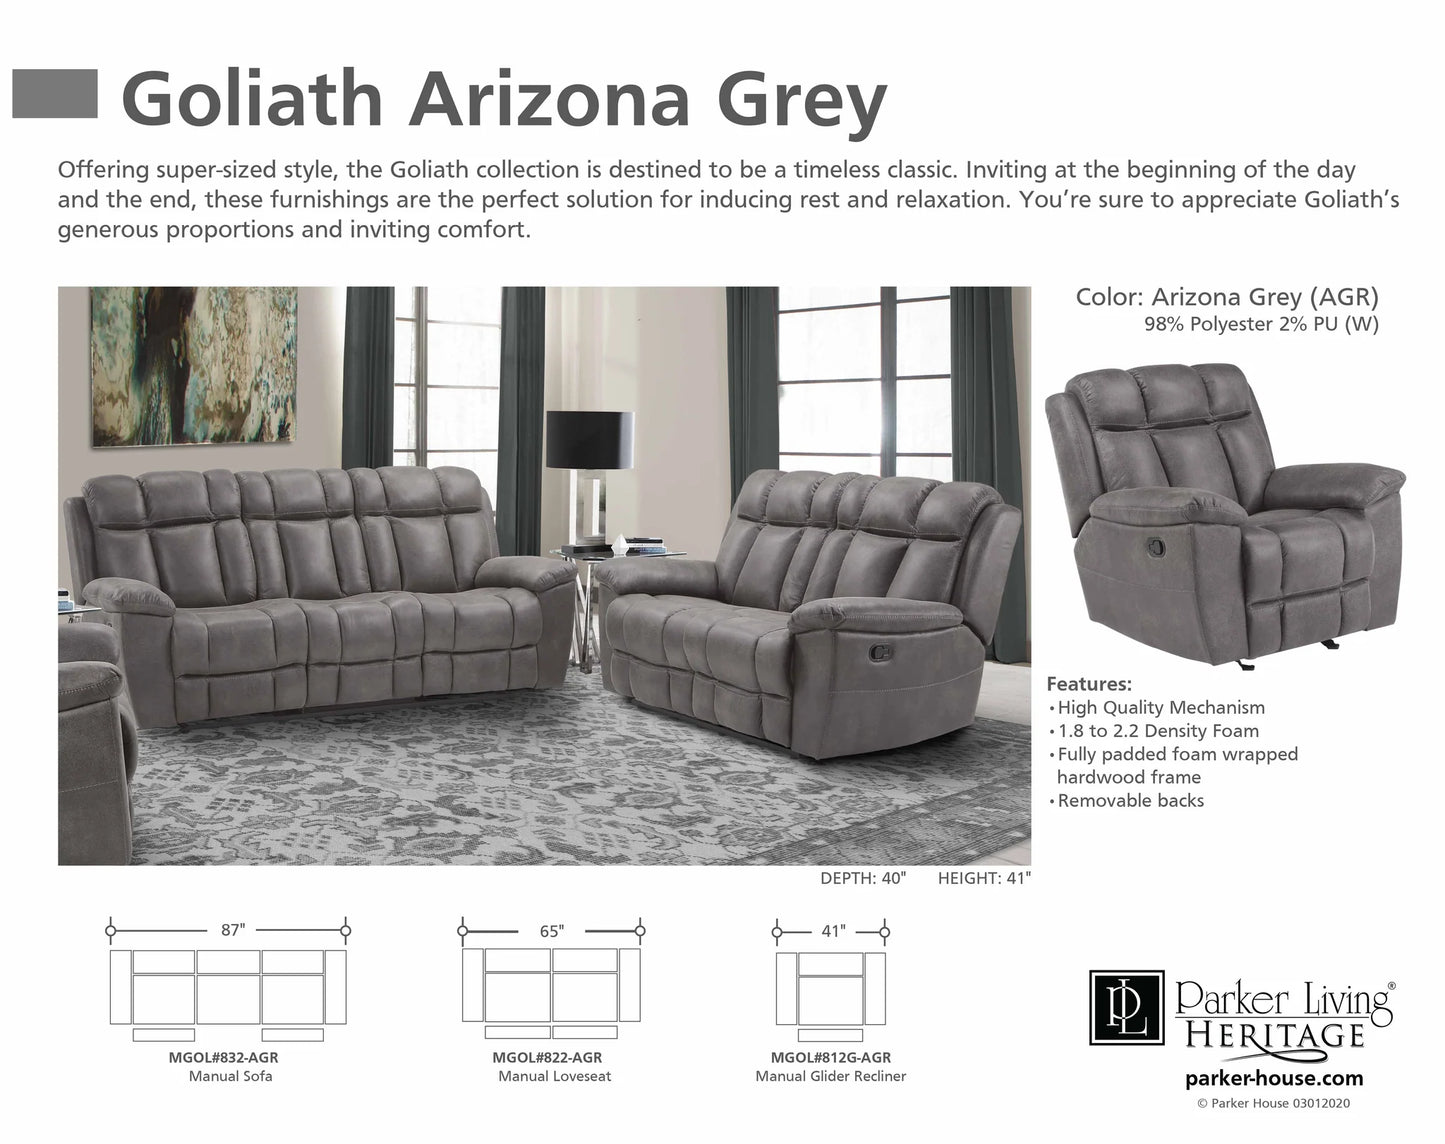 Parker House Goliath - Arizona Grey Manual Recliner